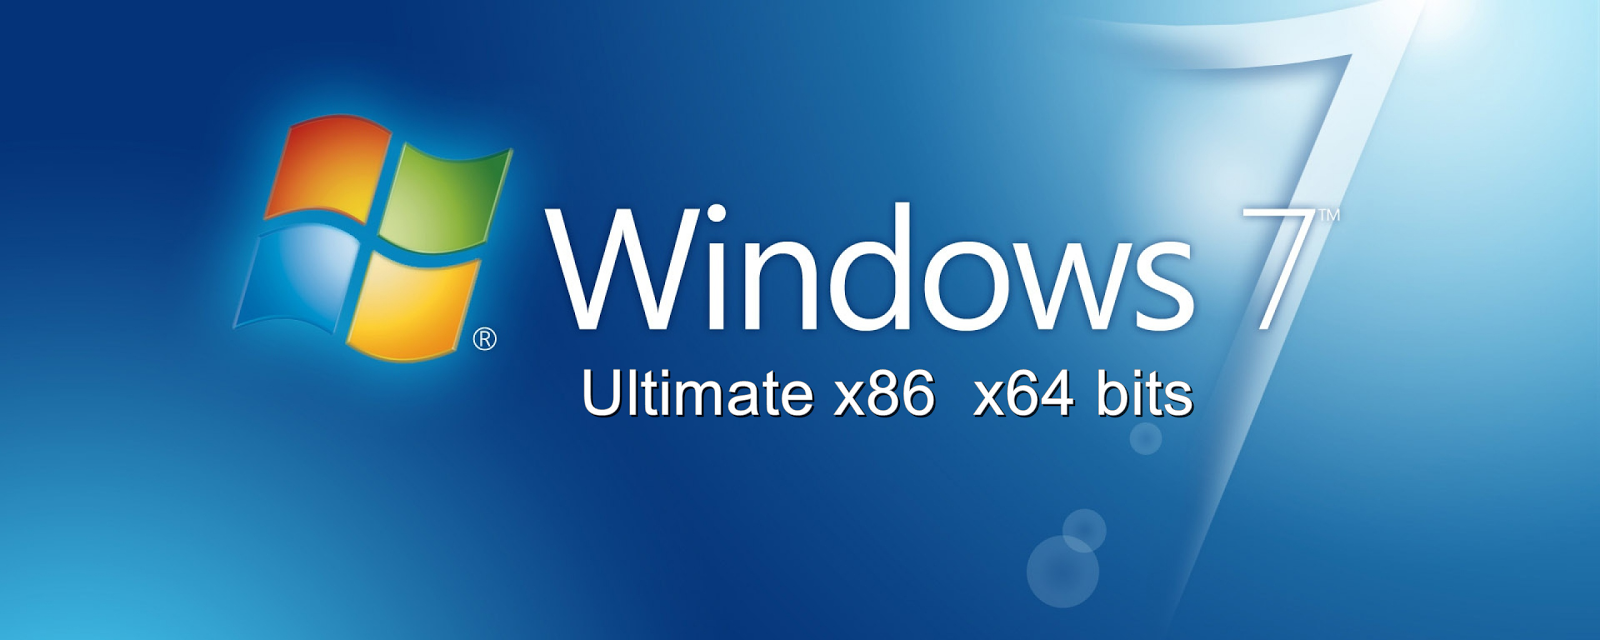 windows 7 professional 32 bit iso file download filehippo